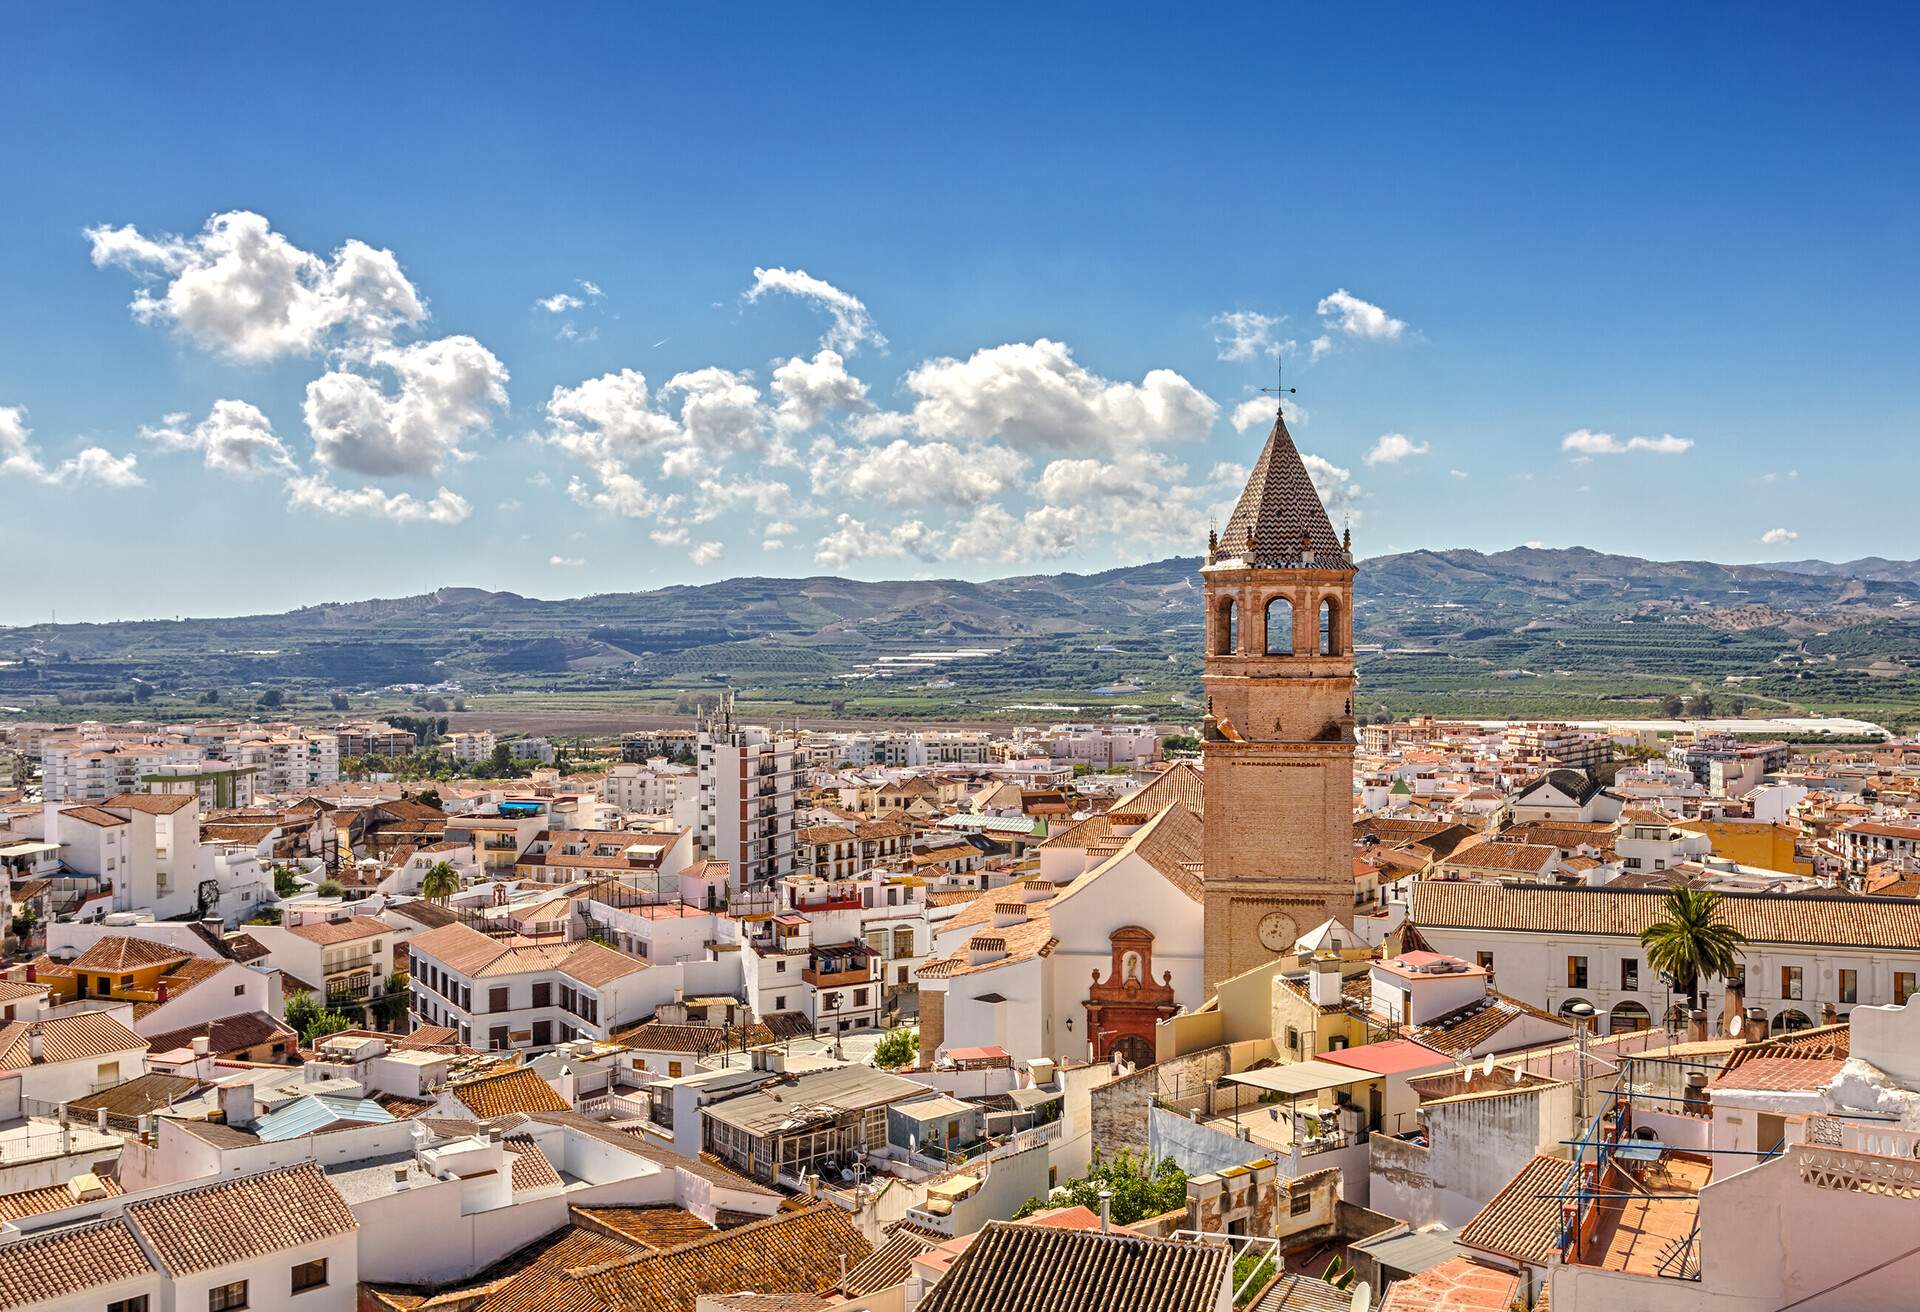 Iglesia de San Juan Bautista, Plaza de la Constitucion of Velez-Malaga. Velez-Malaga, Costa del Sol, Andalucía, Spain. ; Shutterstock ID 1215744199; purchase_order: ; job: ; client: ; other: